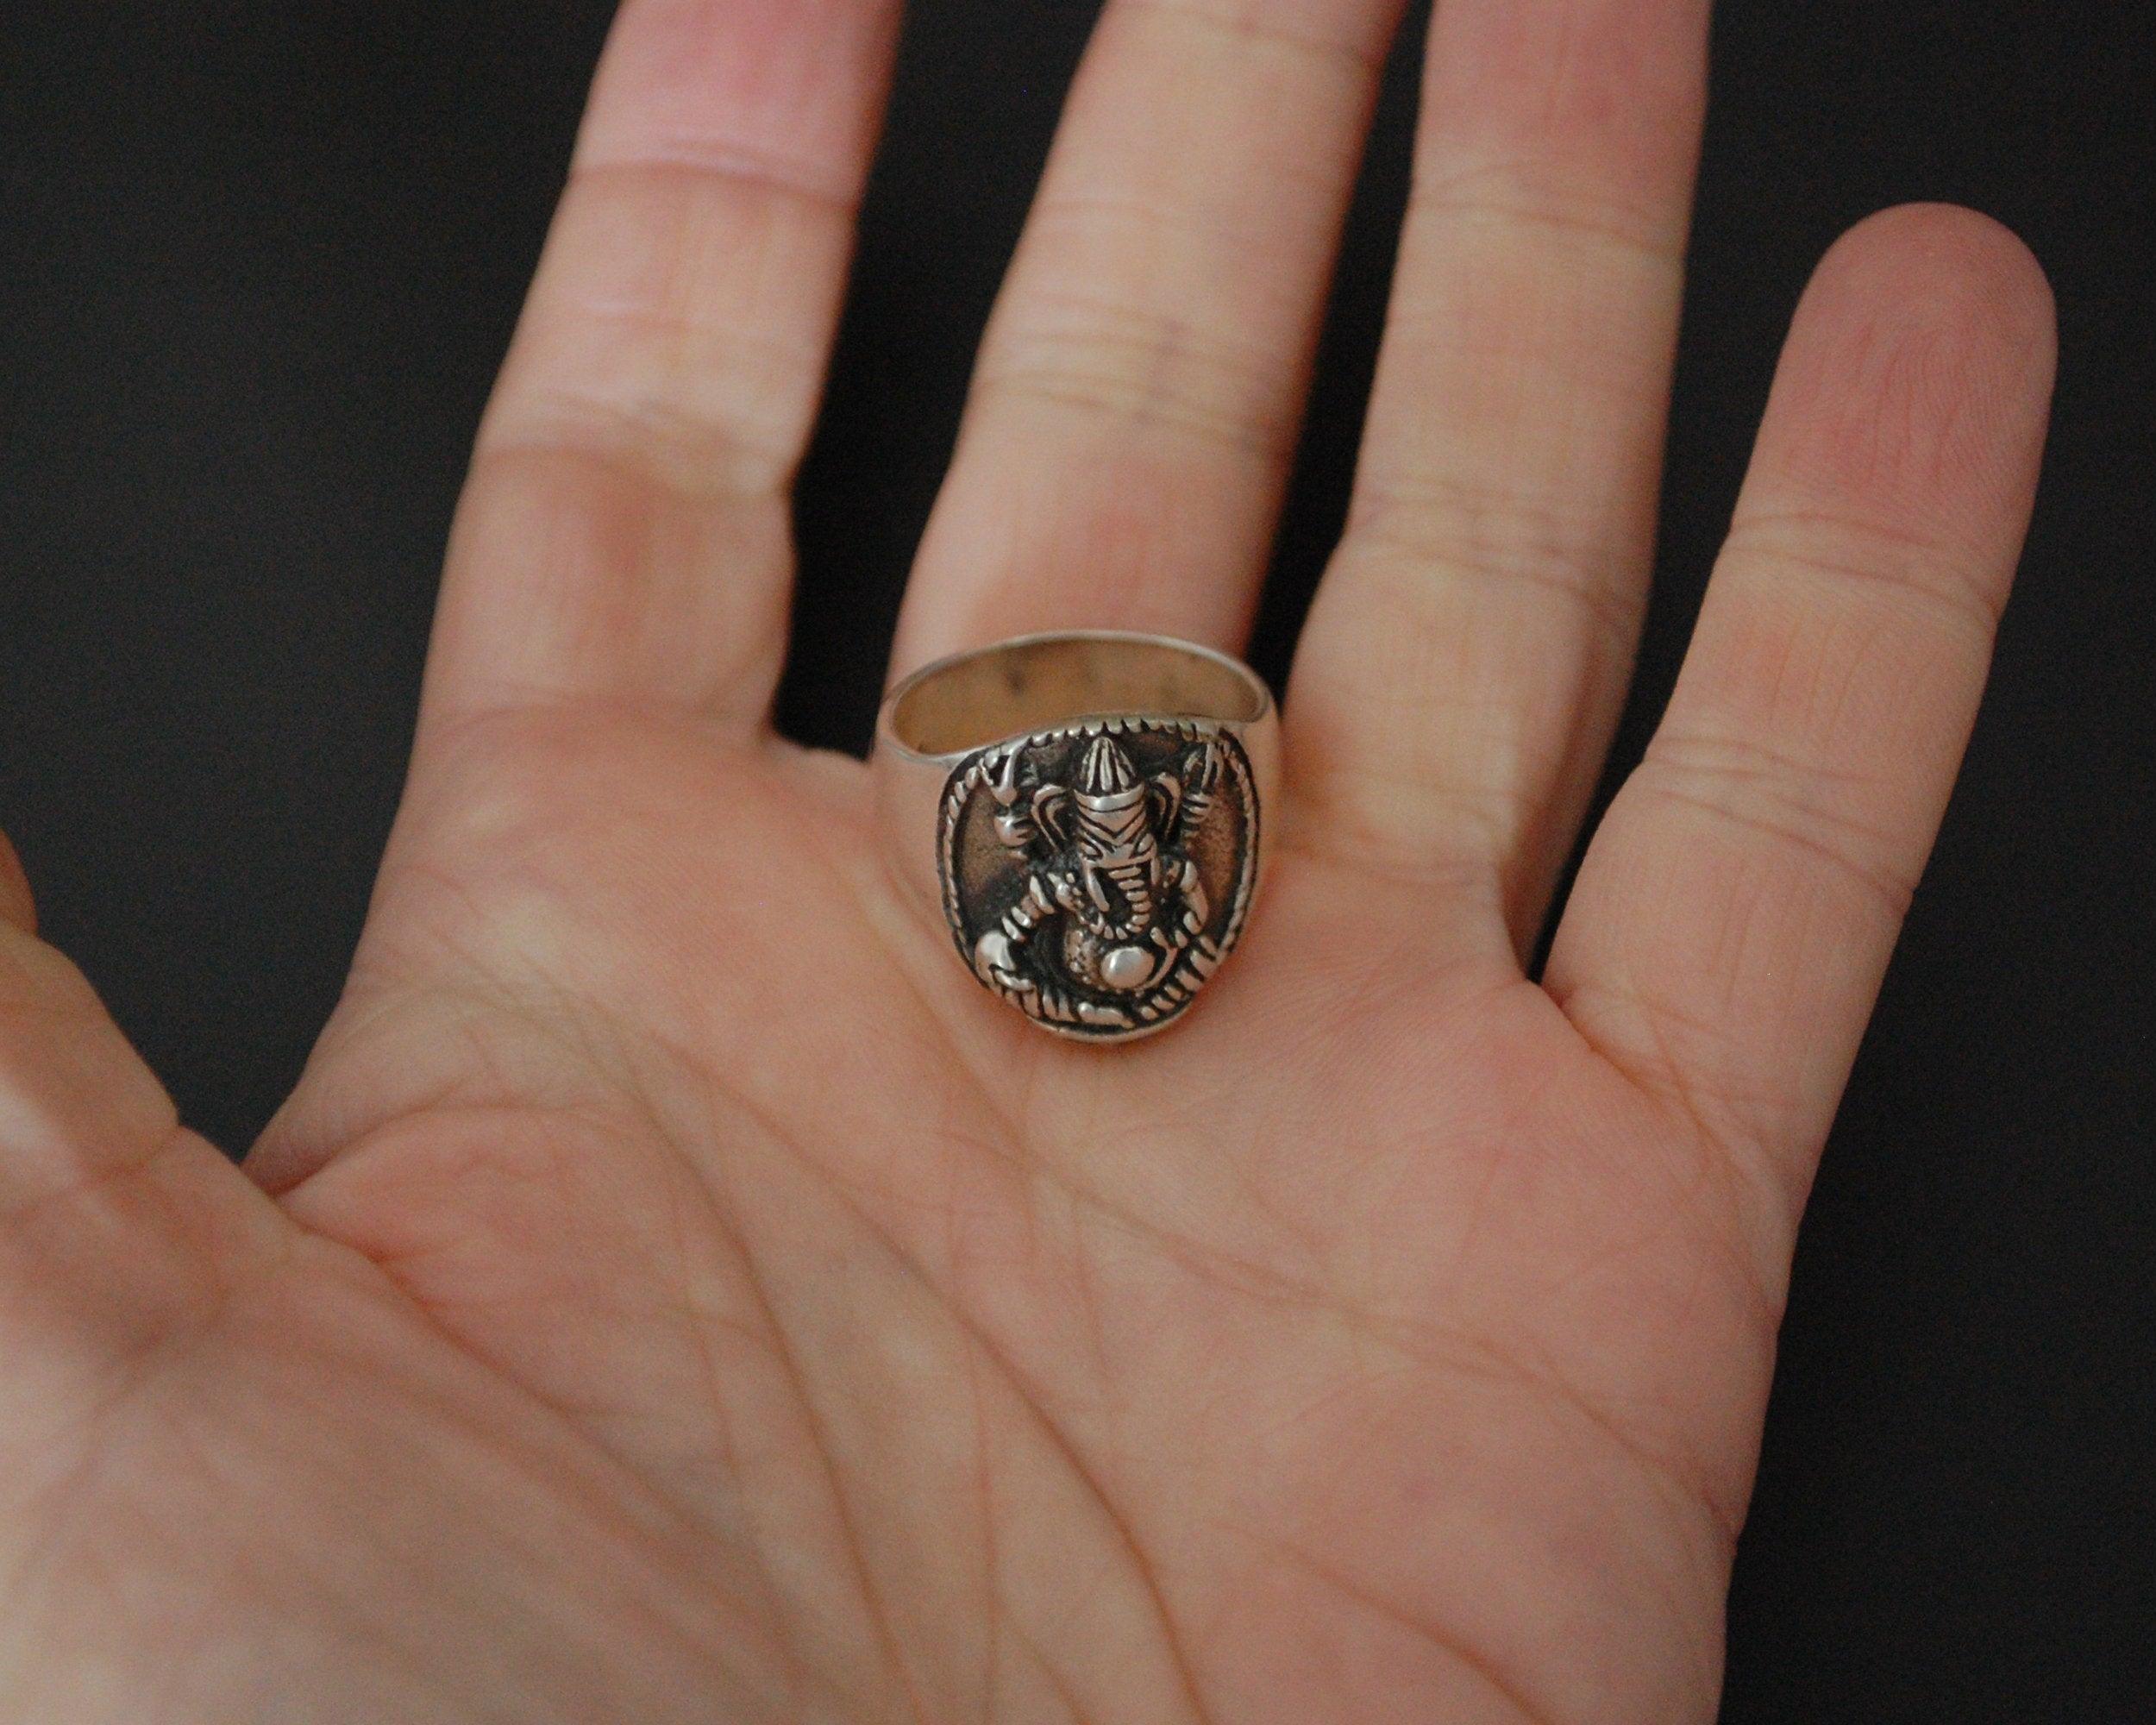 Ganesha Sterling Silver Ring - Size 7.75